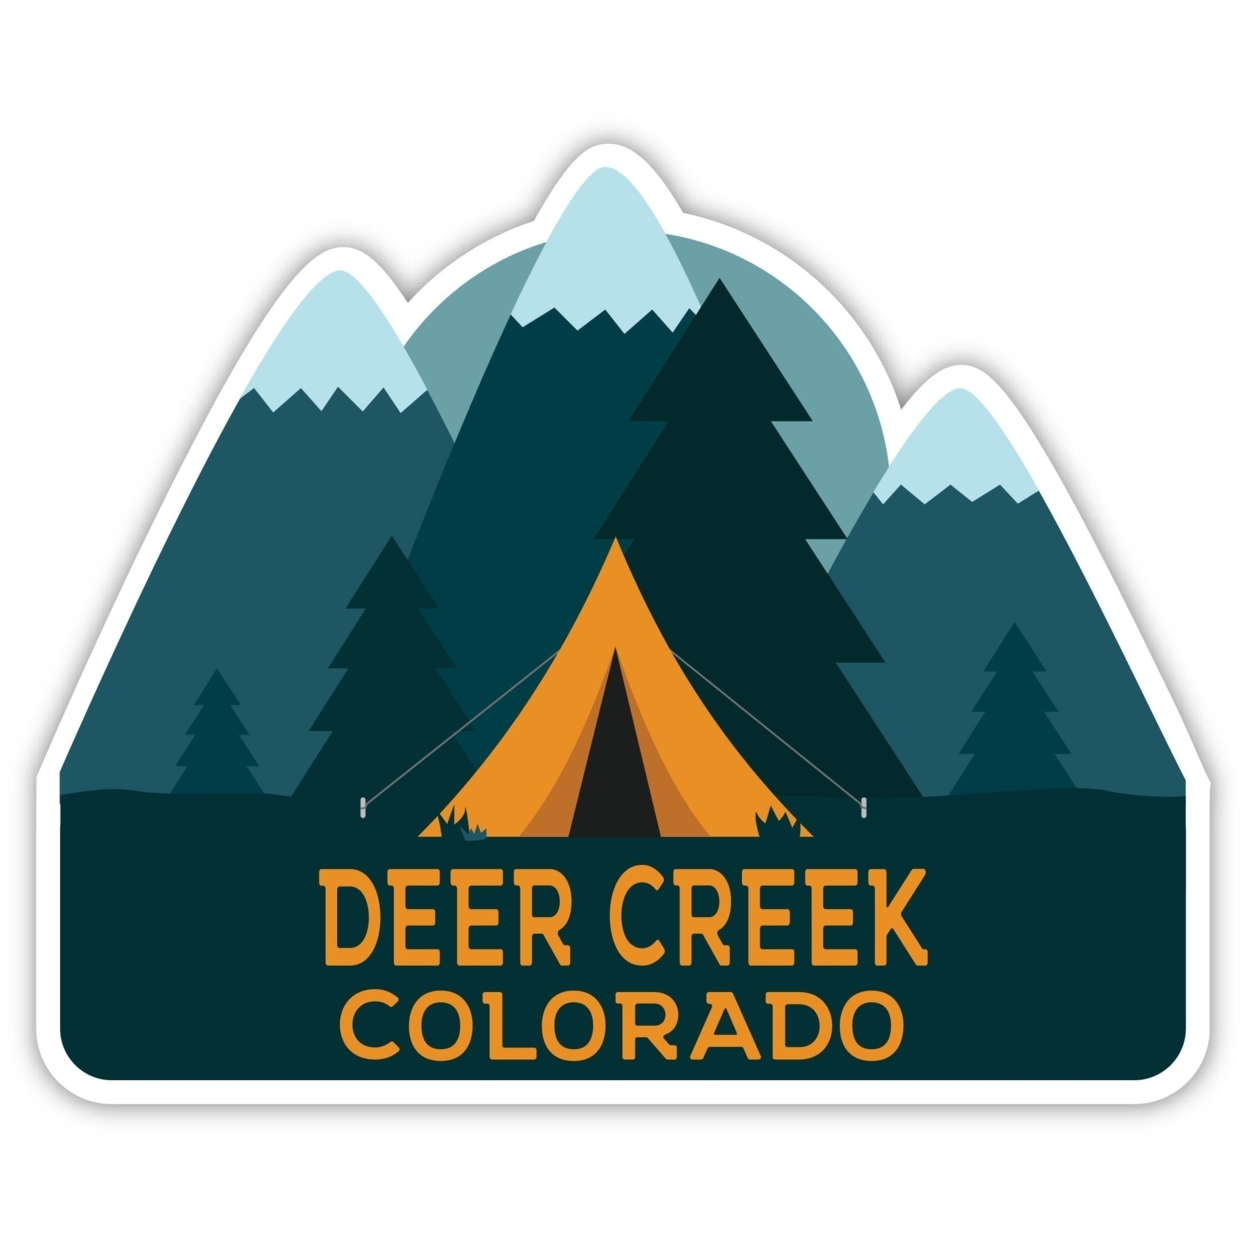 Deer Creek Colorado Souvenir Decorative Stickers (Choose Theme And Size) - 4-Pack, 12-Inch, Tent